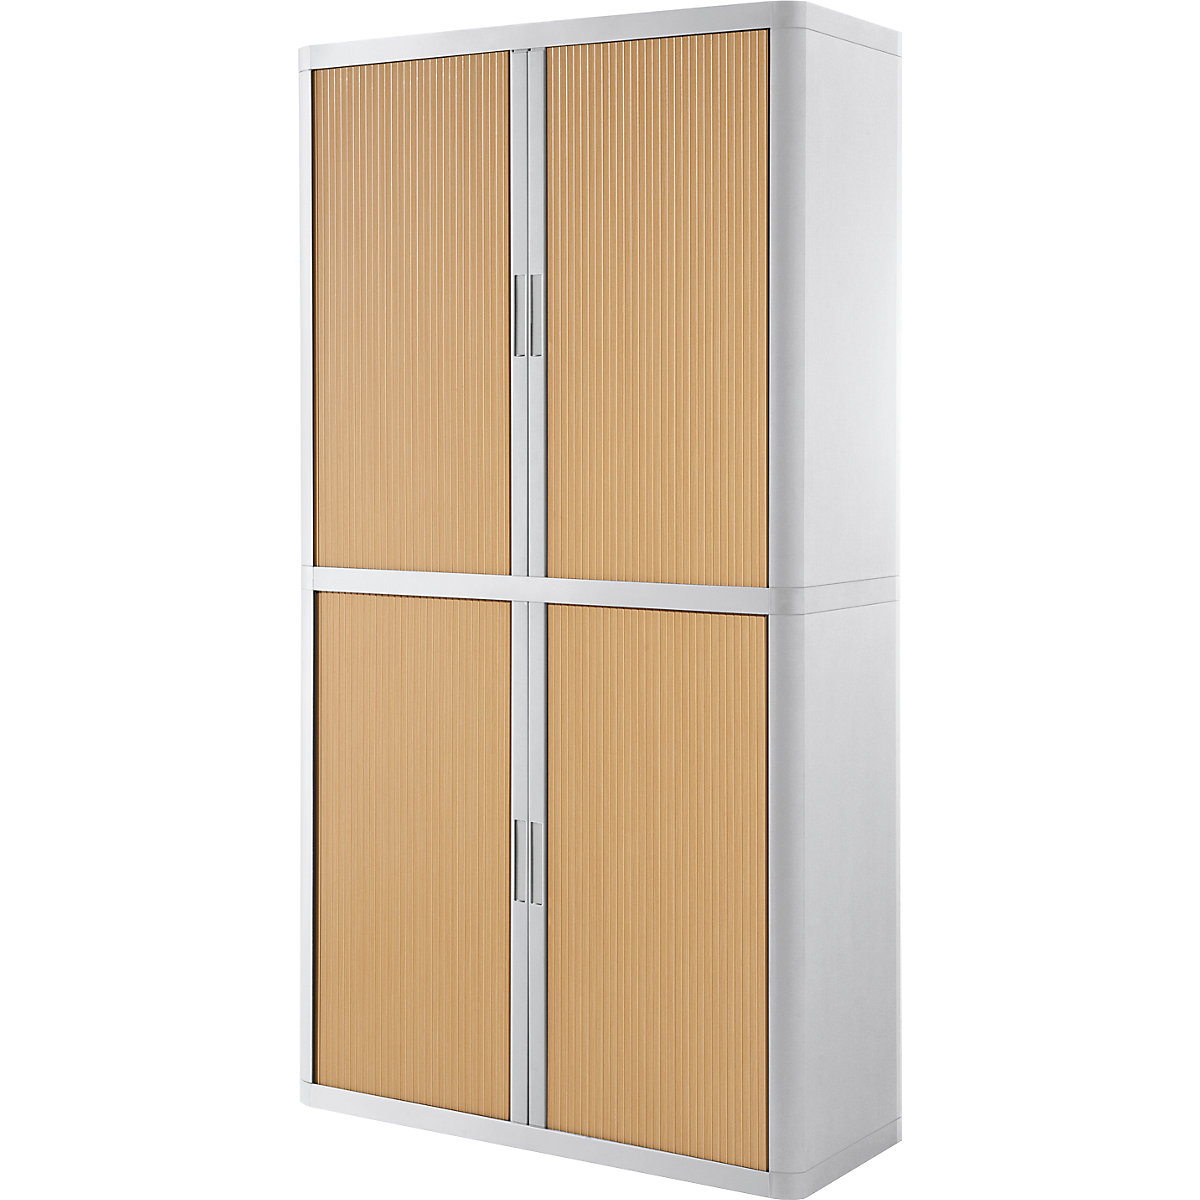 easyOffice® roller shutter cupboard – Paperflow, 4 shelves, height 2040 mm, white / beech-3